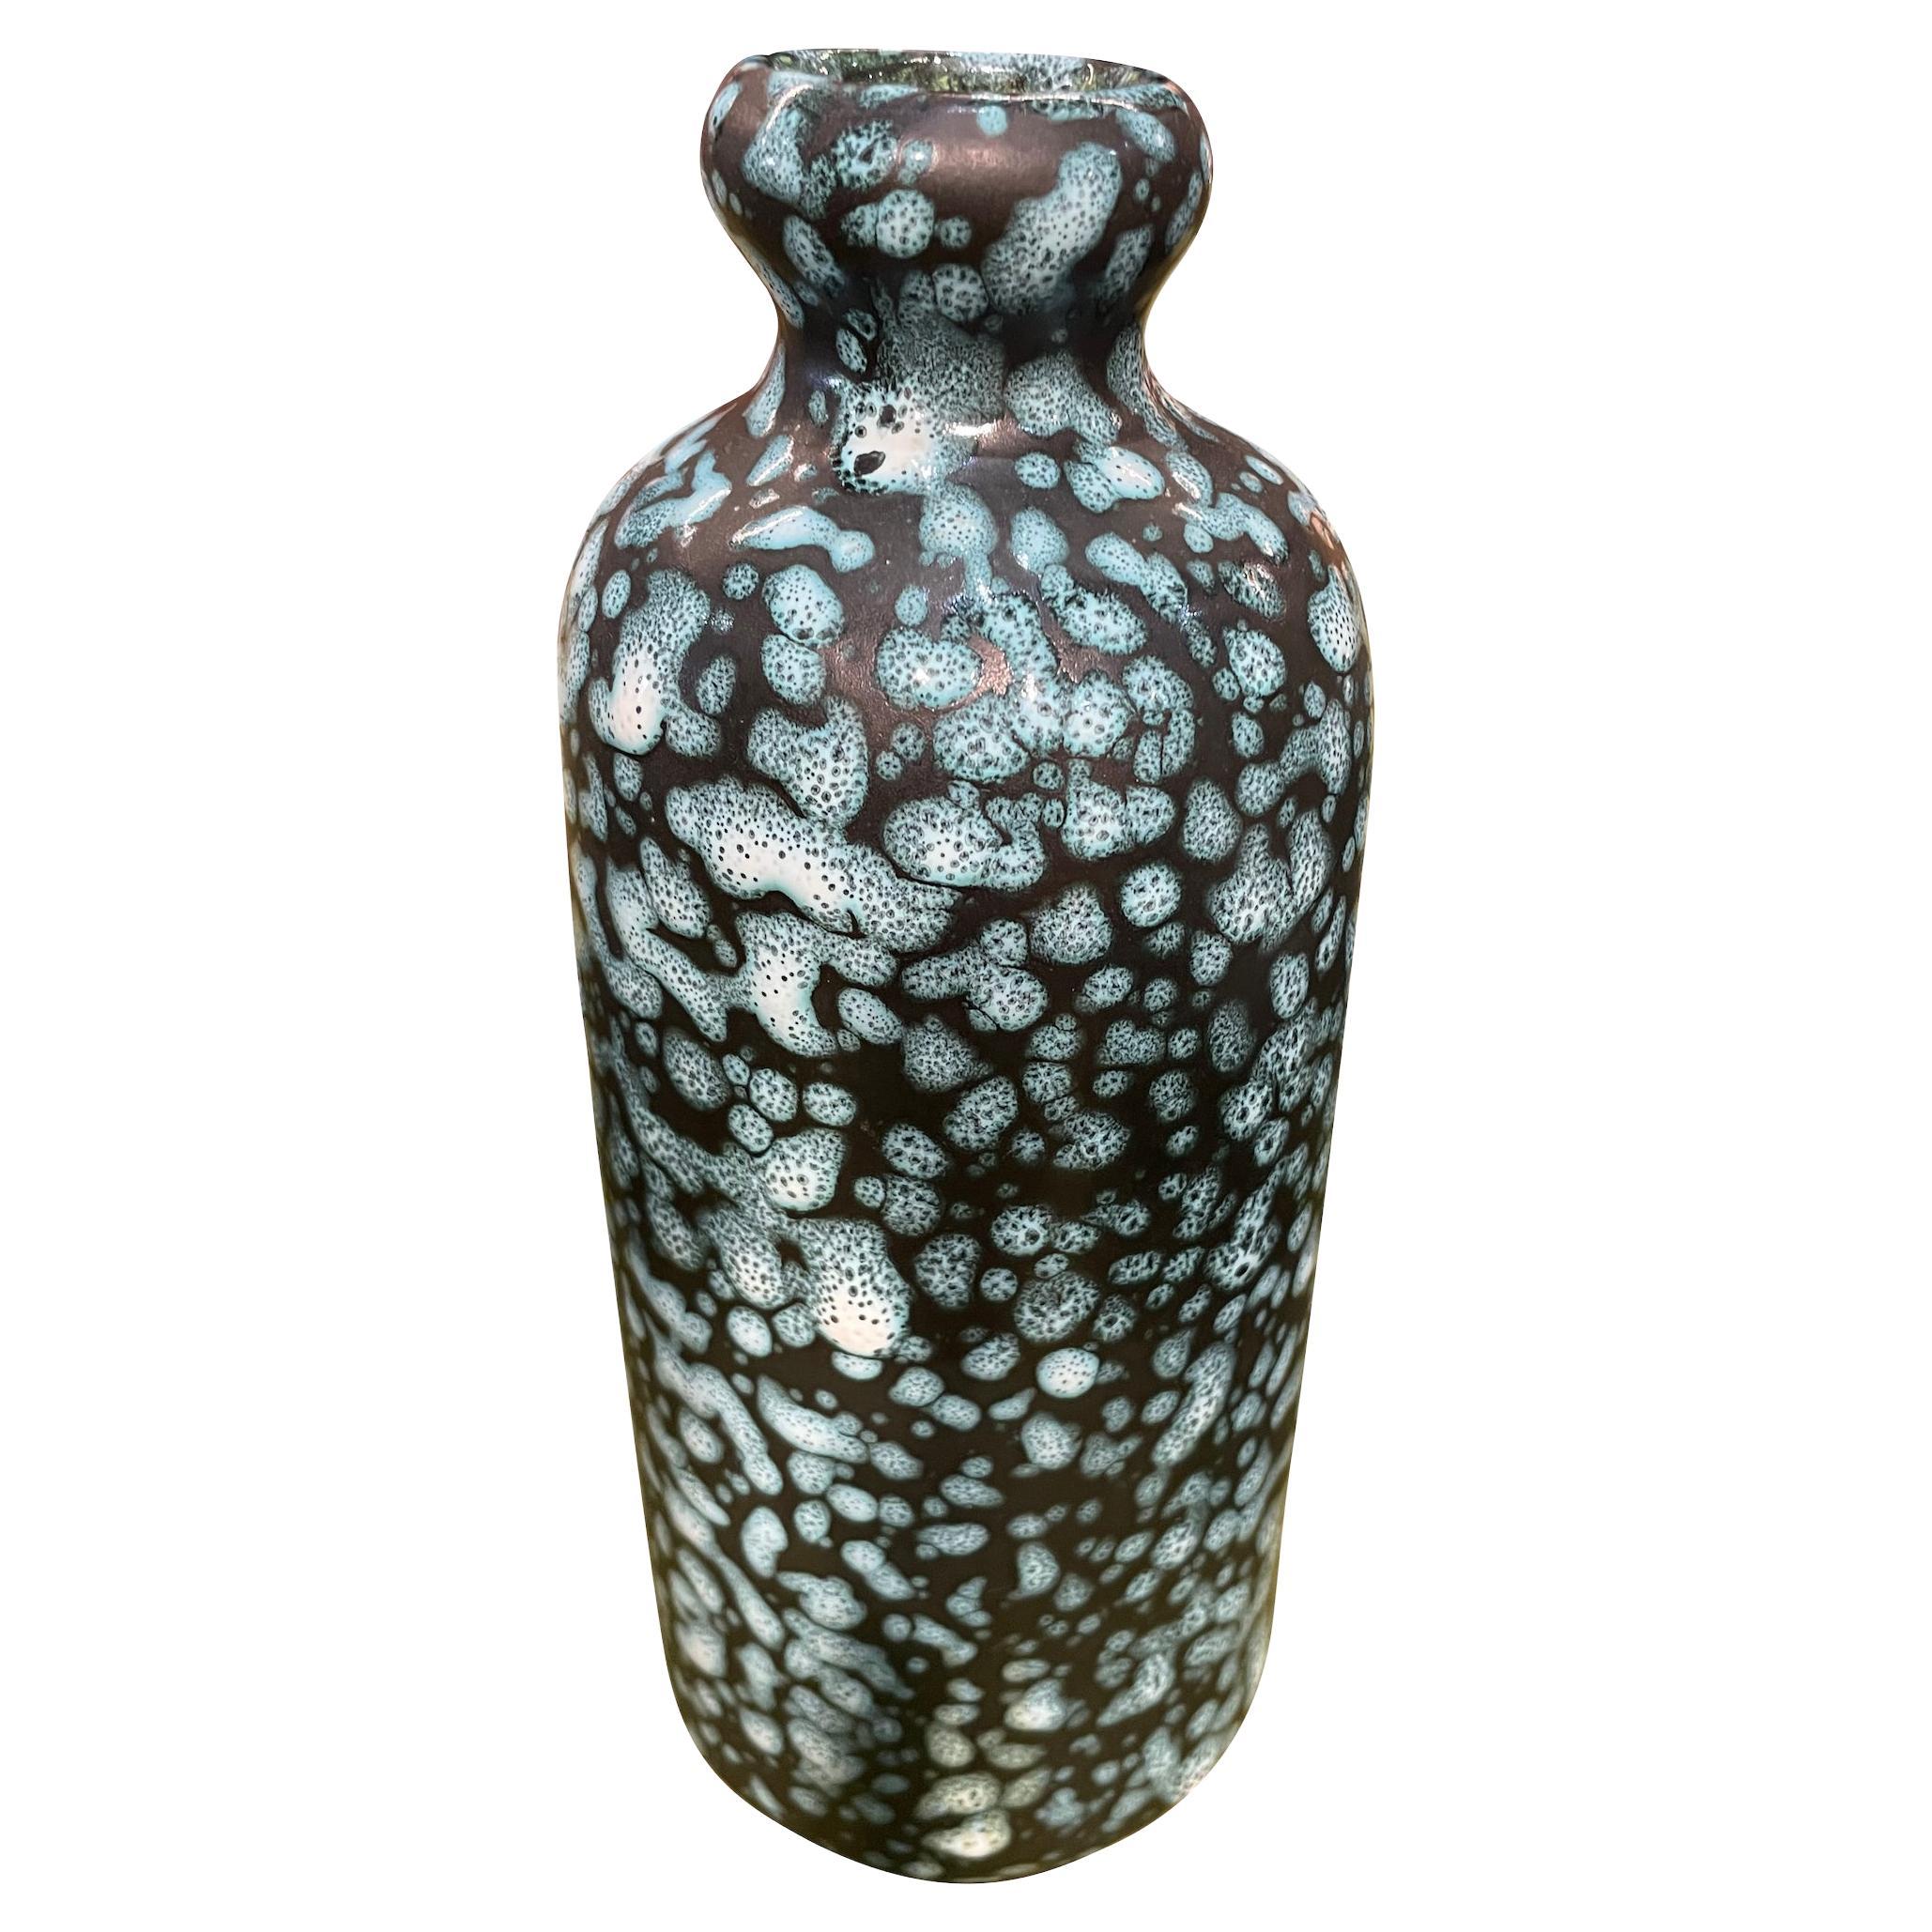 Mid Century Italy black and turquoise glazed ceramic vase.
Overall 